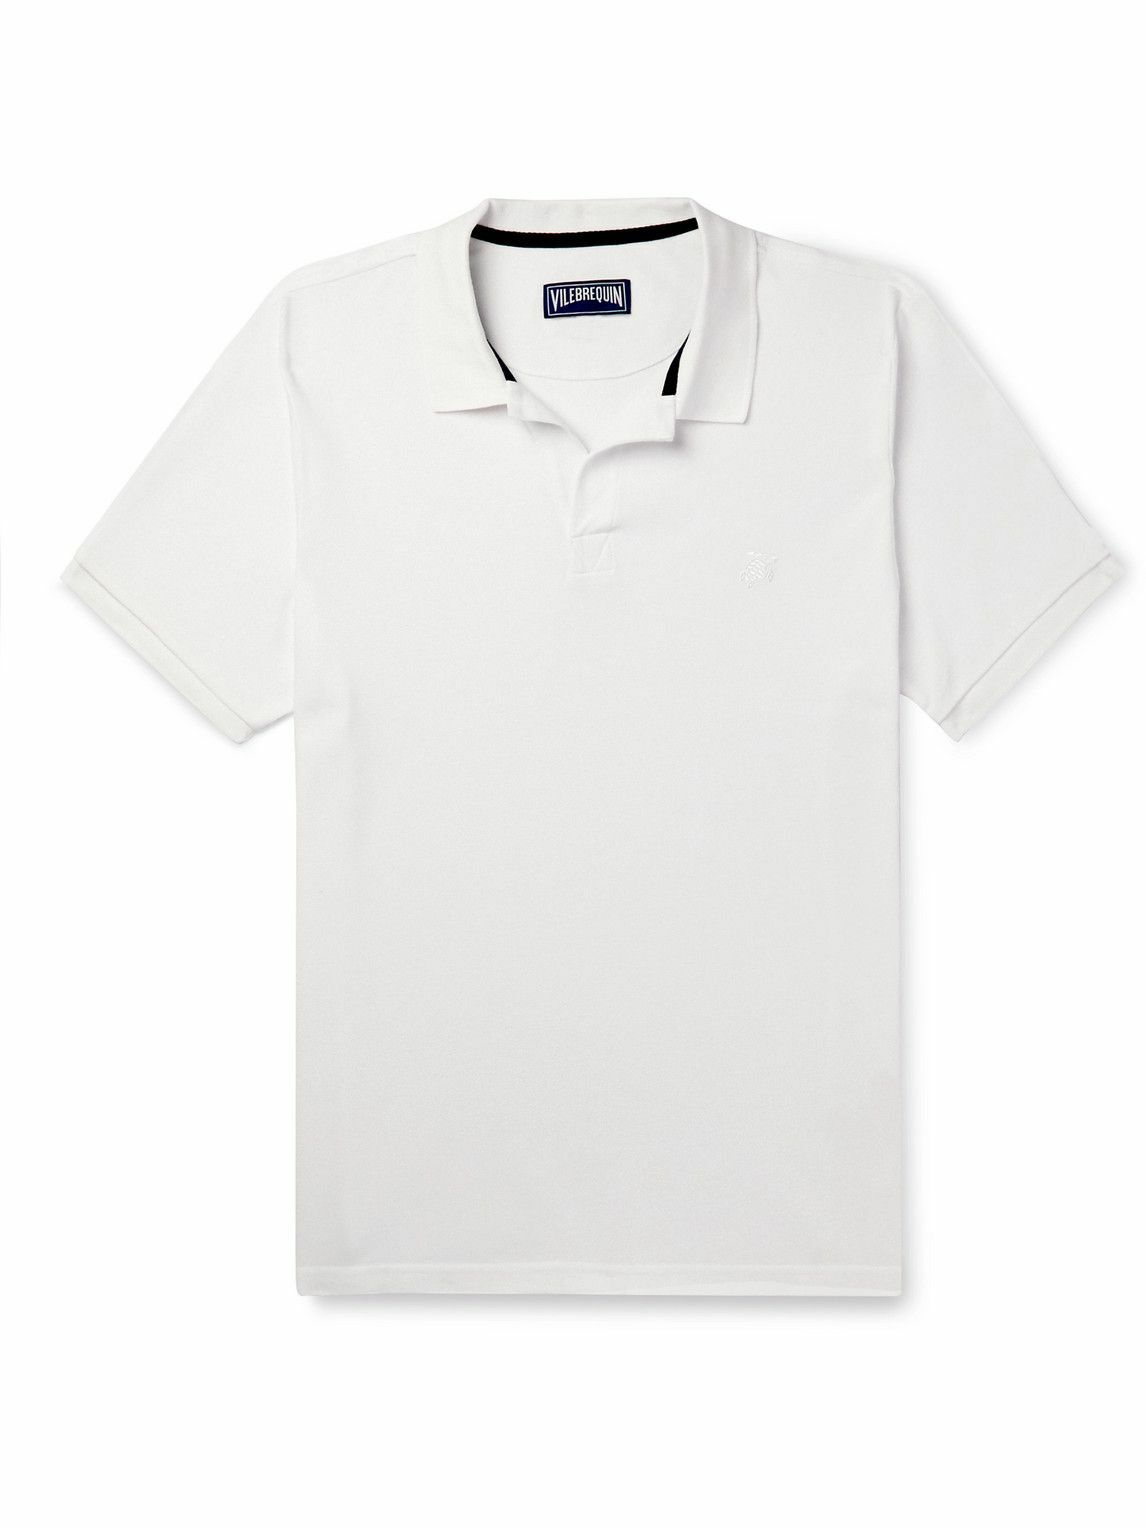 Vilebrequin - Logo-Embroidered Cotton-Piqué Polo Shirt - White Vilebrequin